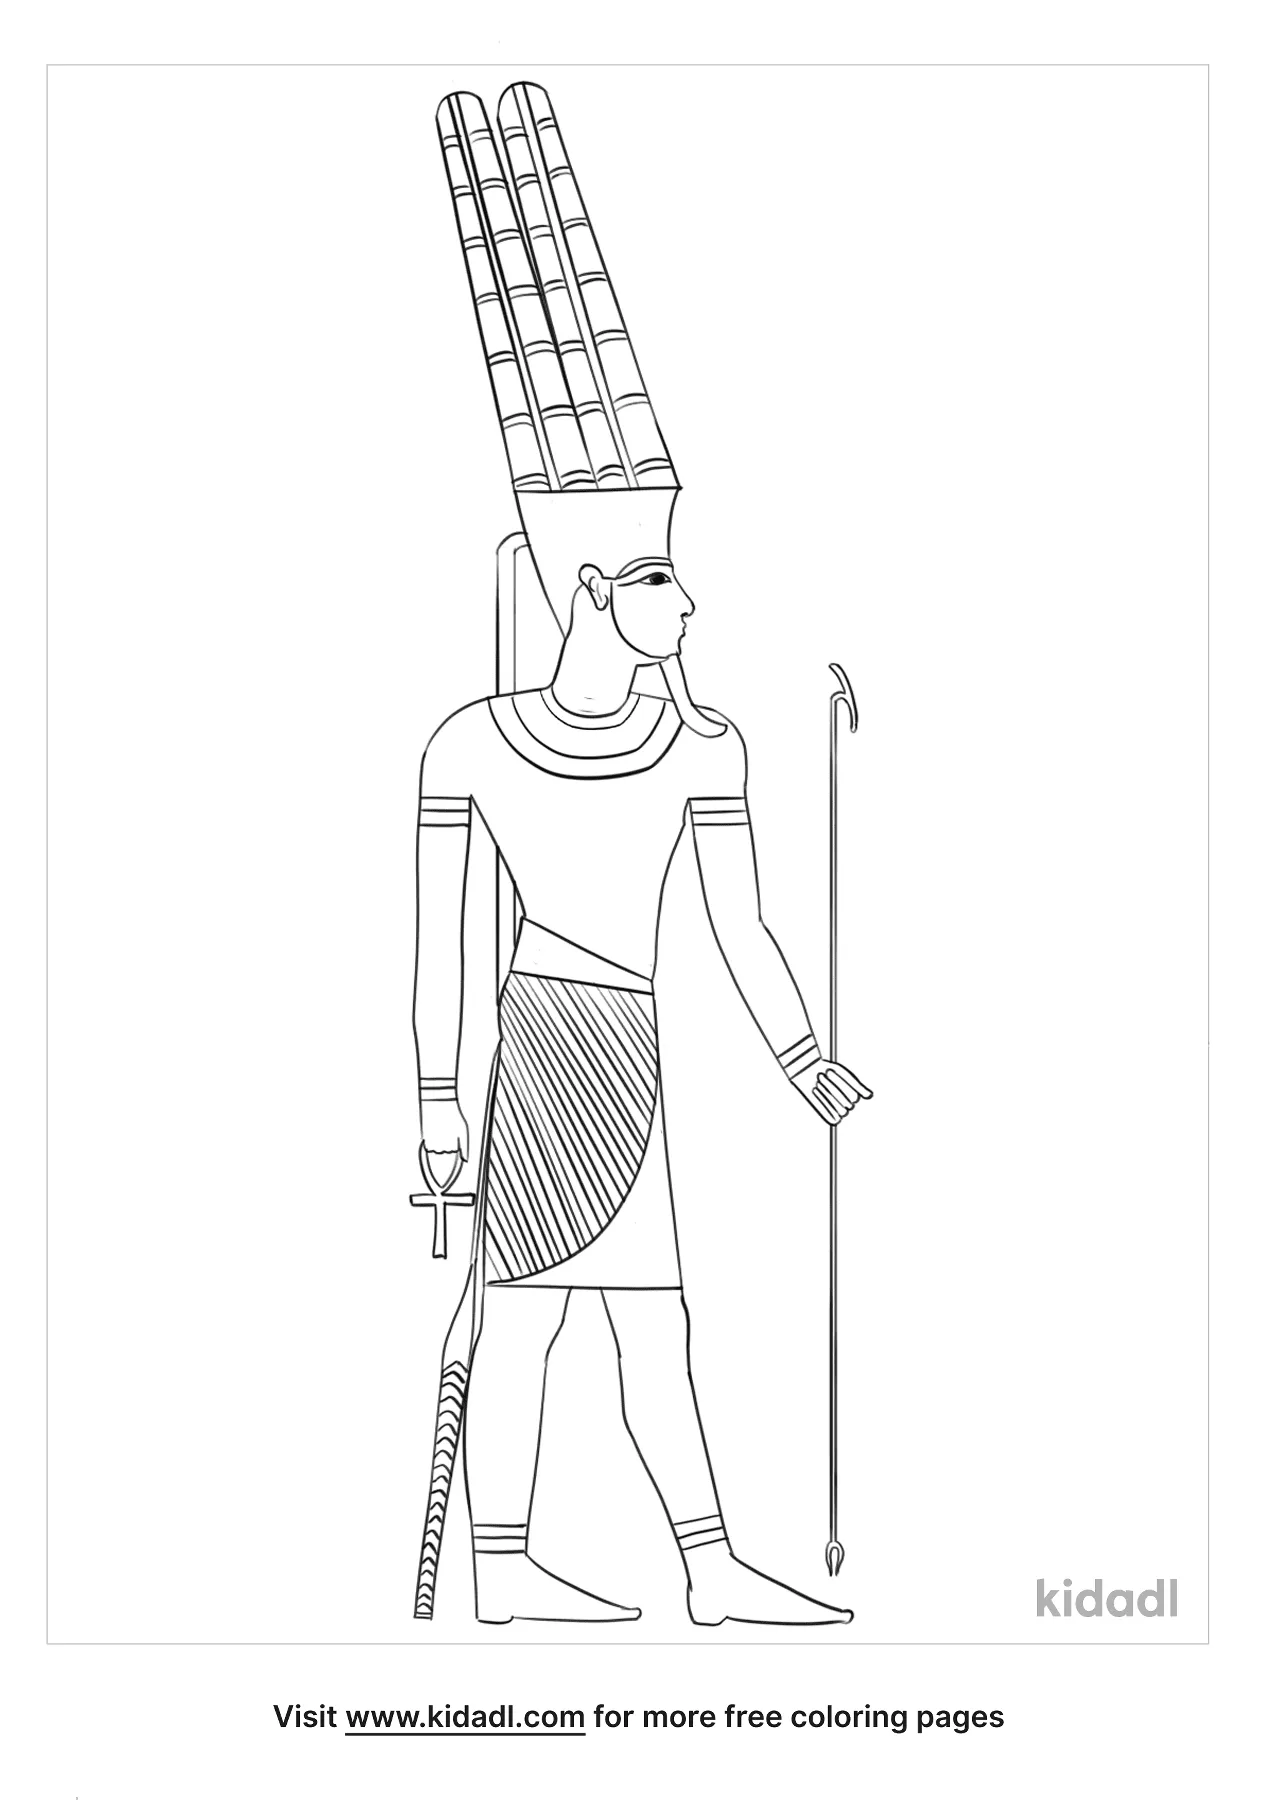 Free Amun Coloring Page | Coloring Page Printables | Kidadl